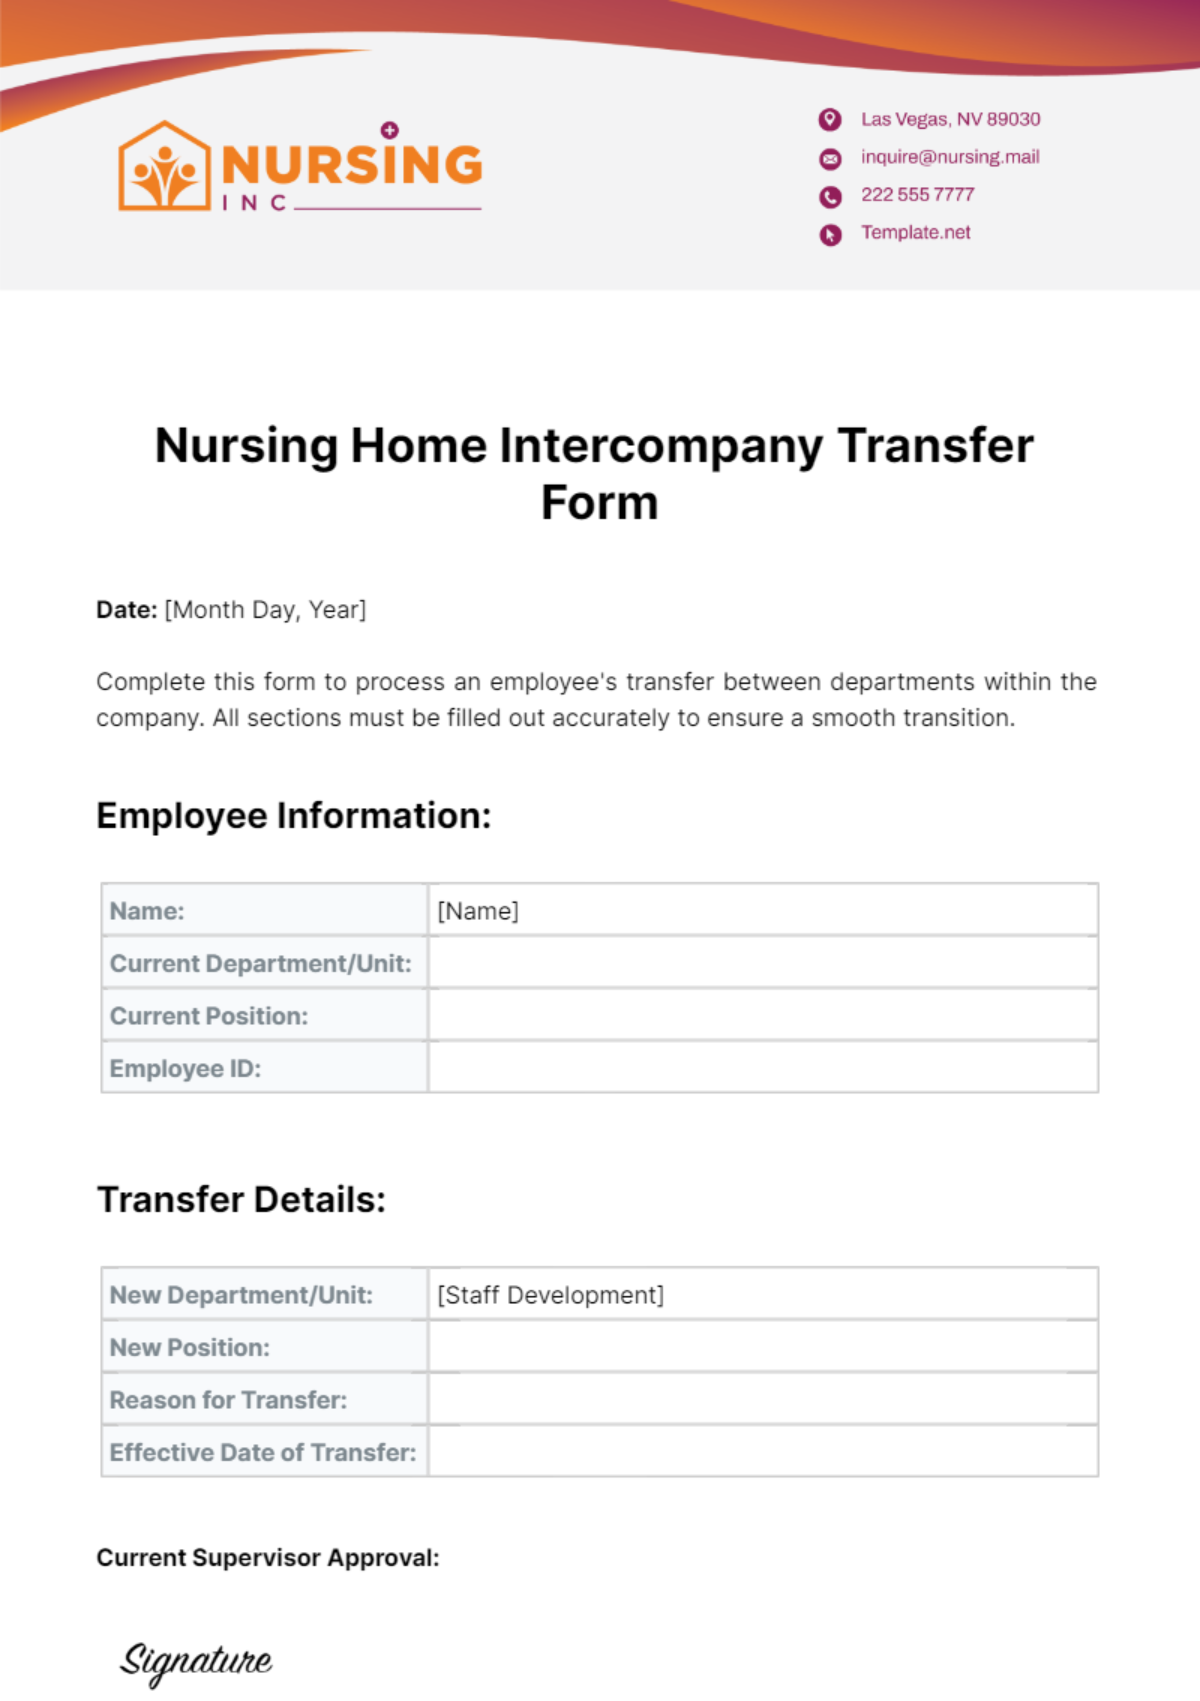 Free Nursing Home Intercompany Transfer Form Template